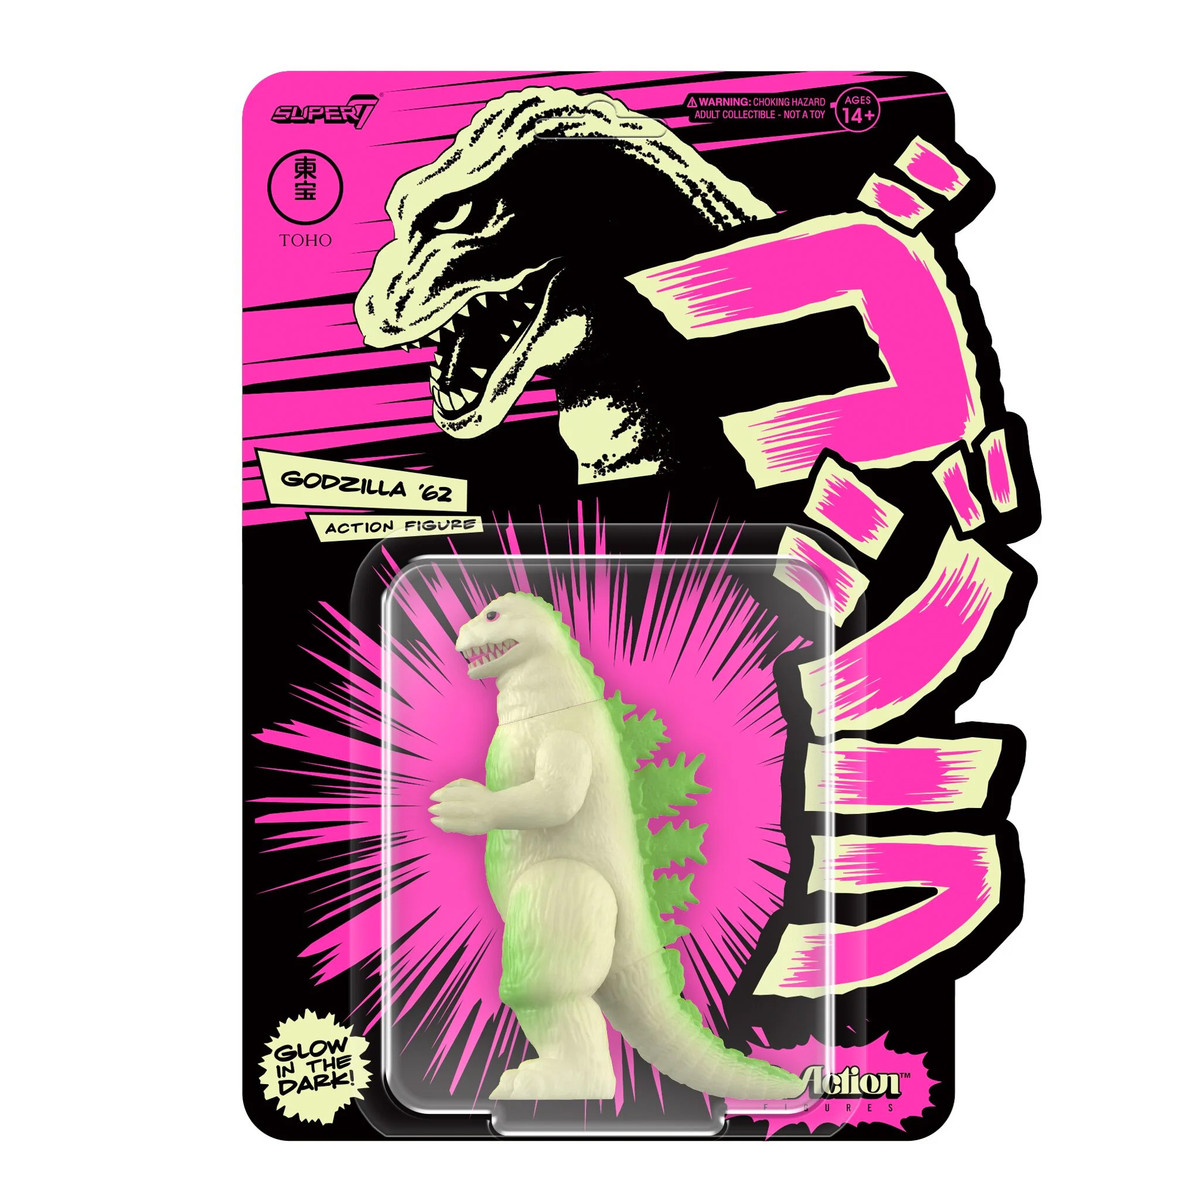 Toho ReAction Figure Wave 4 Godzilla '62 Glow - myplasticheart